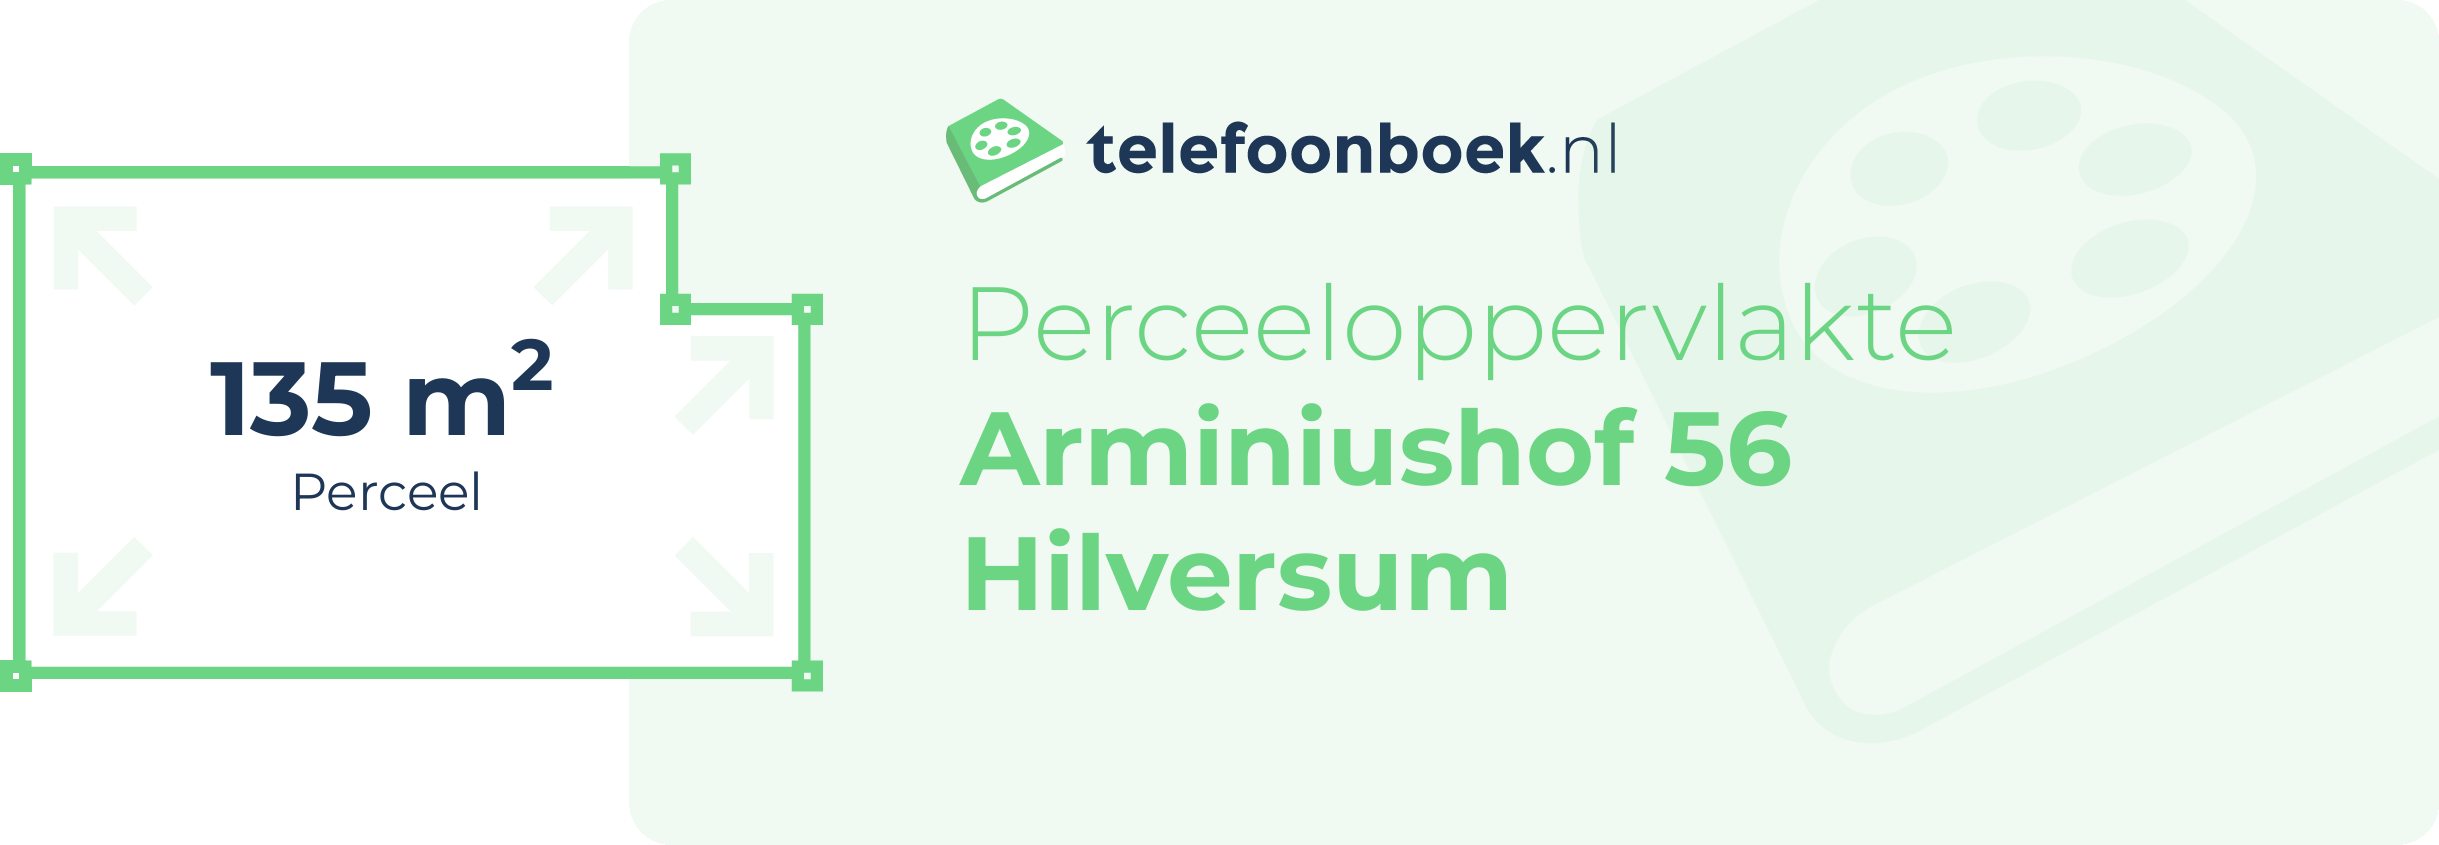 Perceeloppervlakte Arminiushof 56 Hilversum